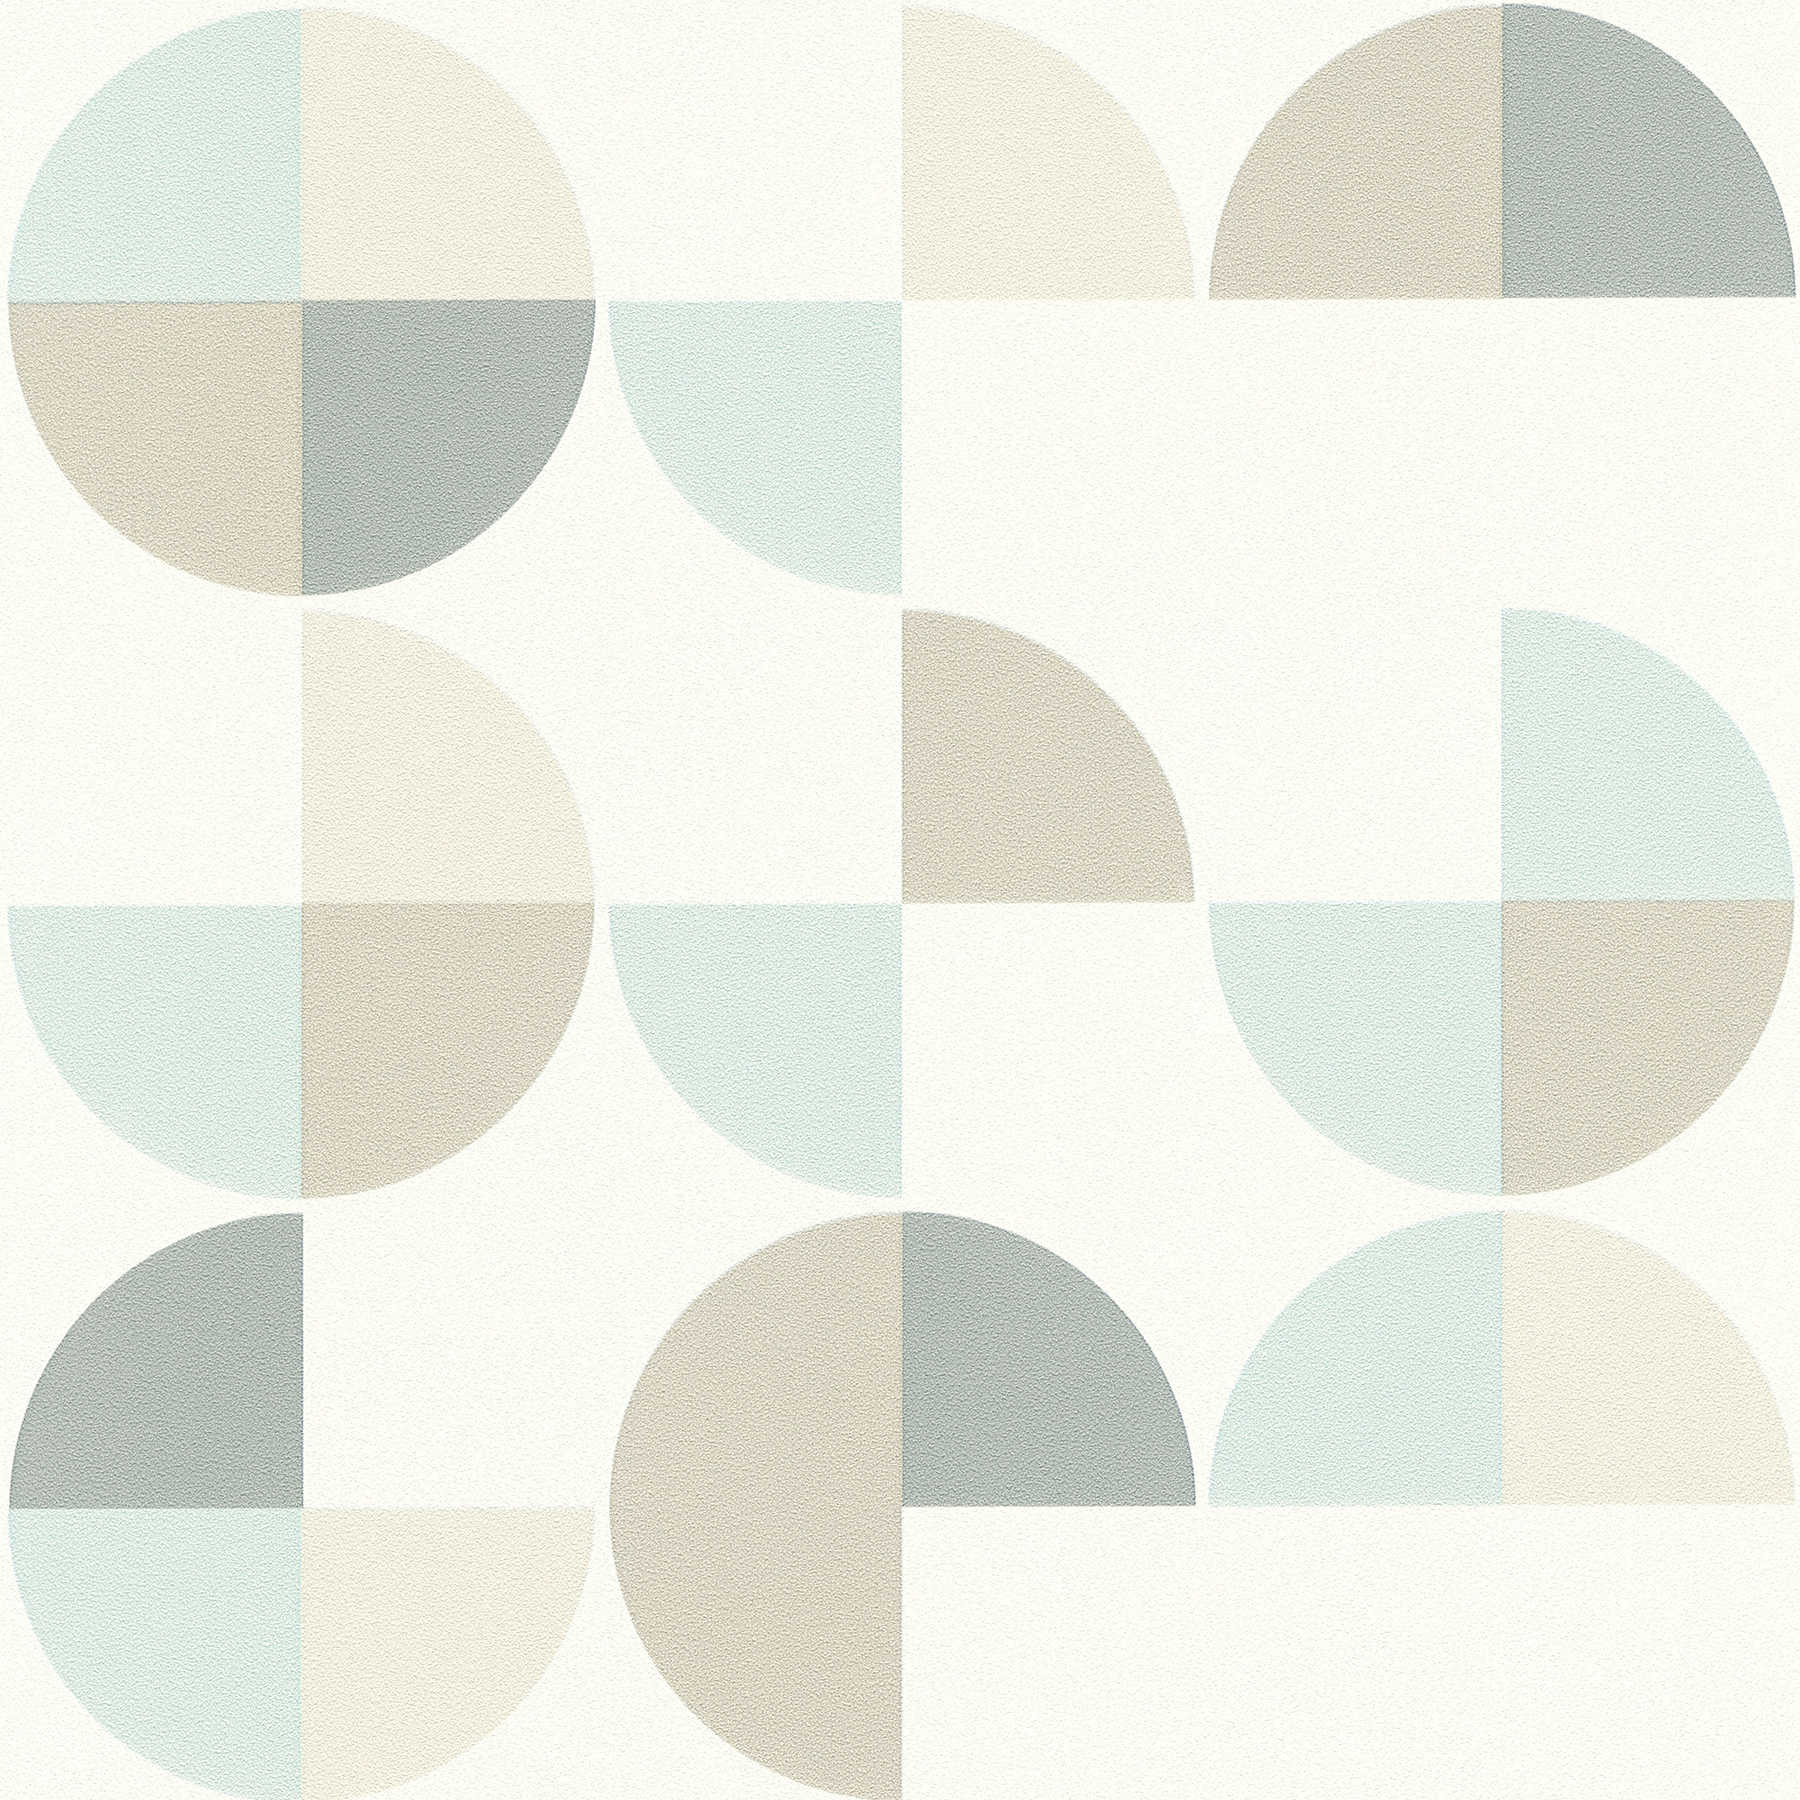         Geometrische Mustertapete im Scandinavian Style – Blau, Grau, Beige
    